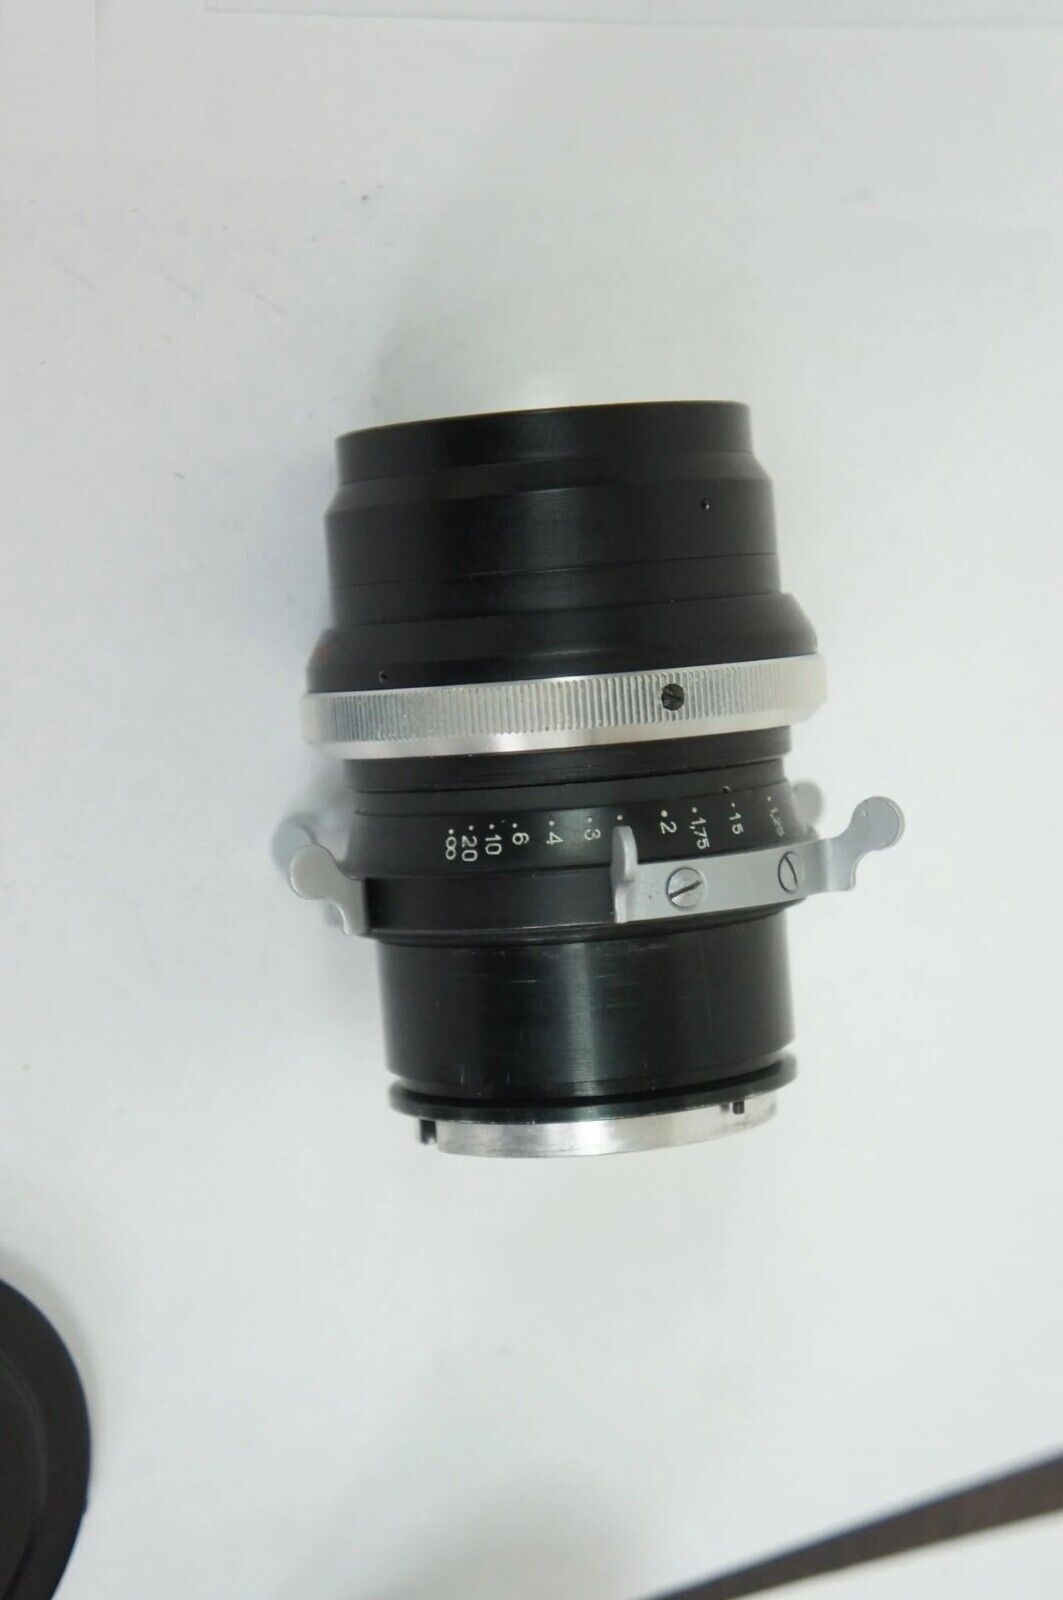 Rare PO2-2m 75mm f/2.0 OCT18 RO2 Fast Portrait cinema Lens like OKC1-75-1 OST-18